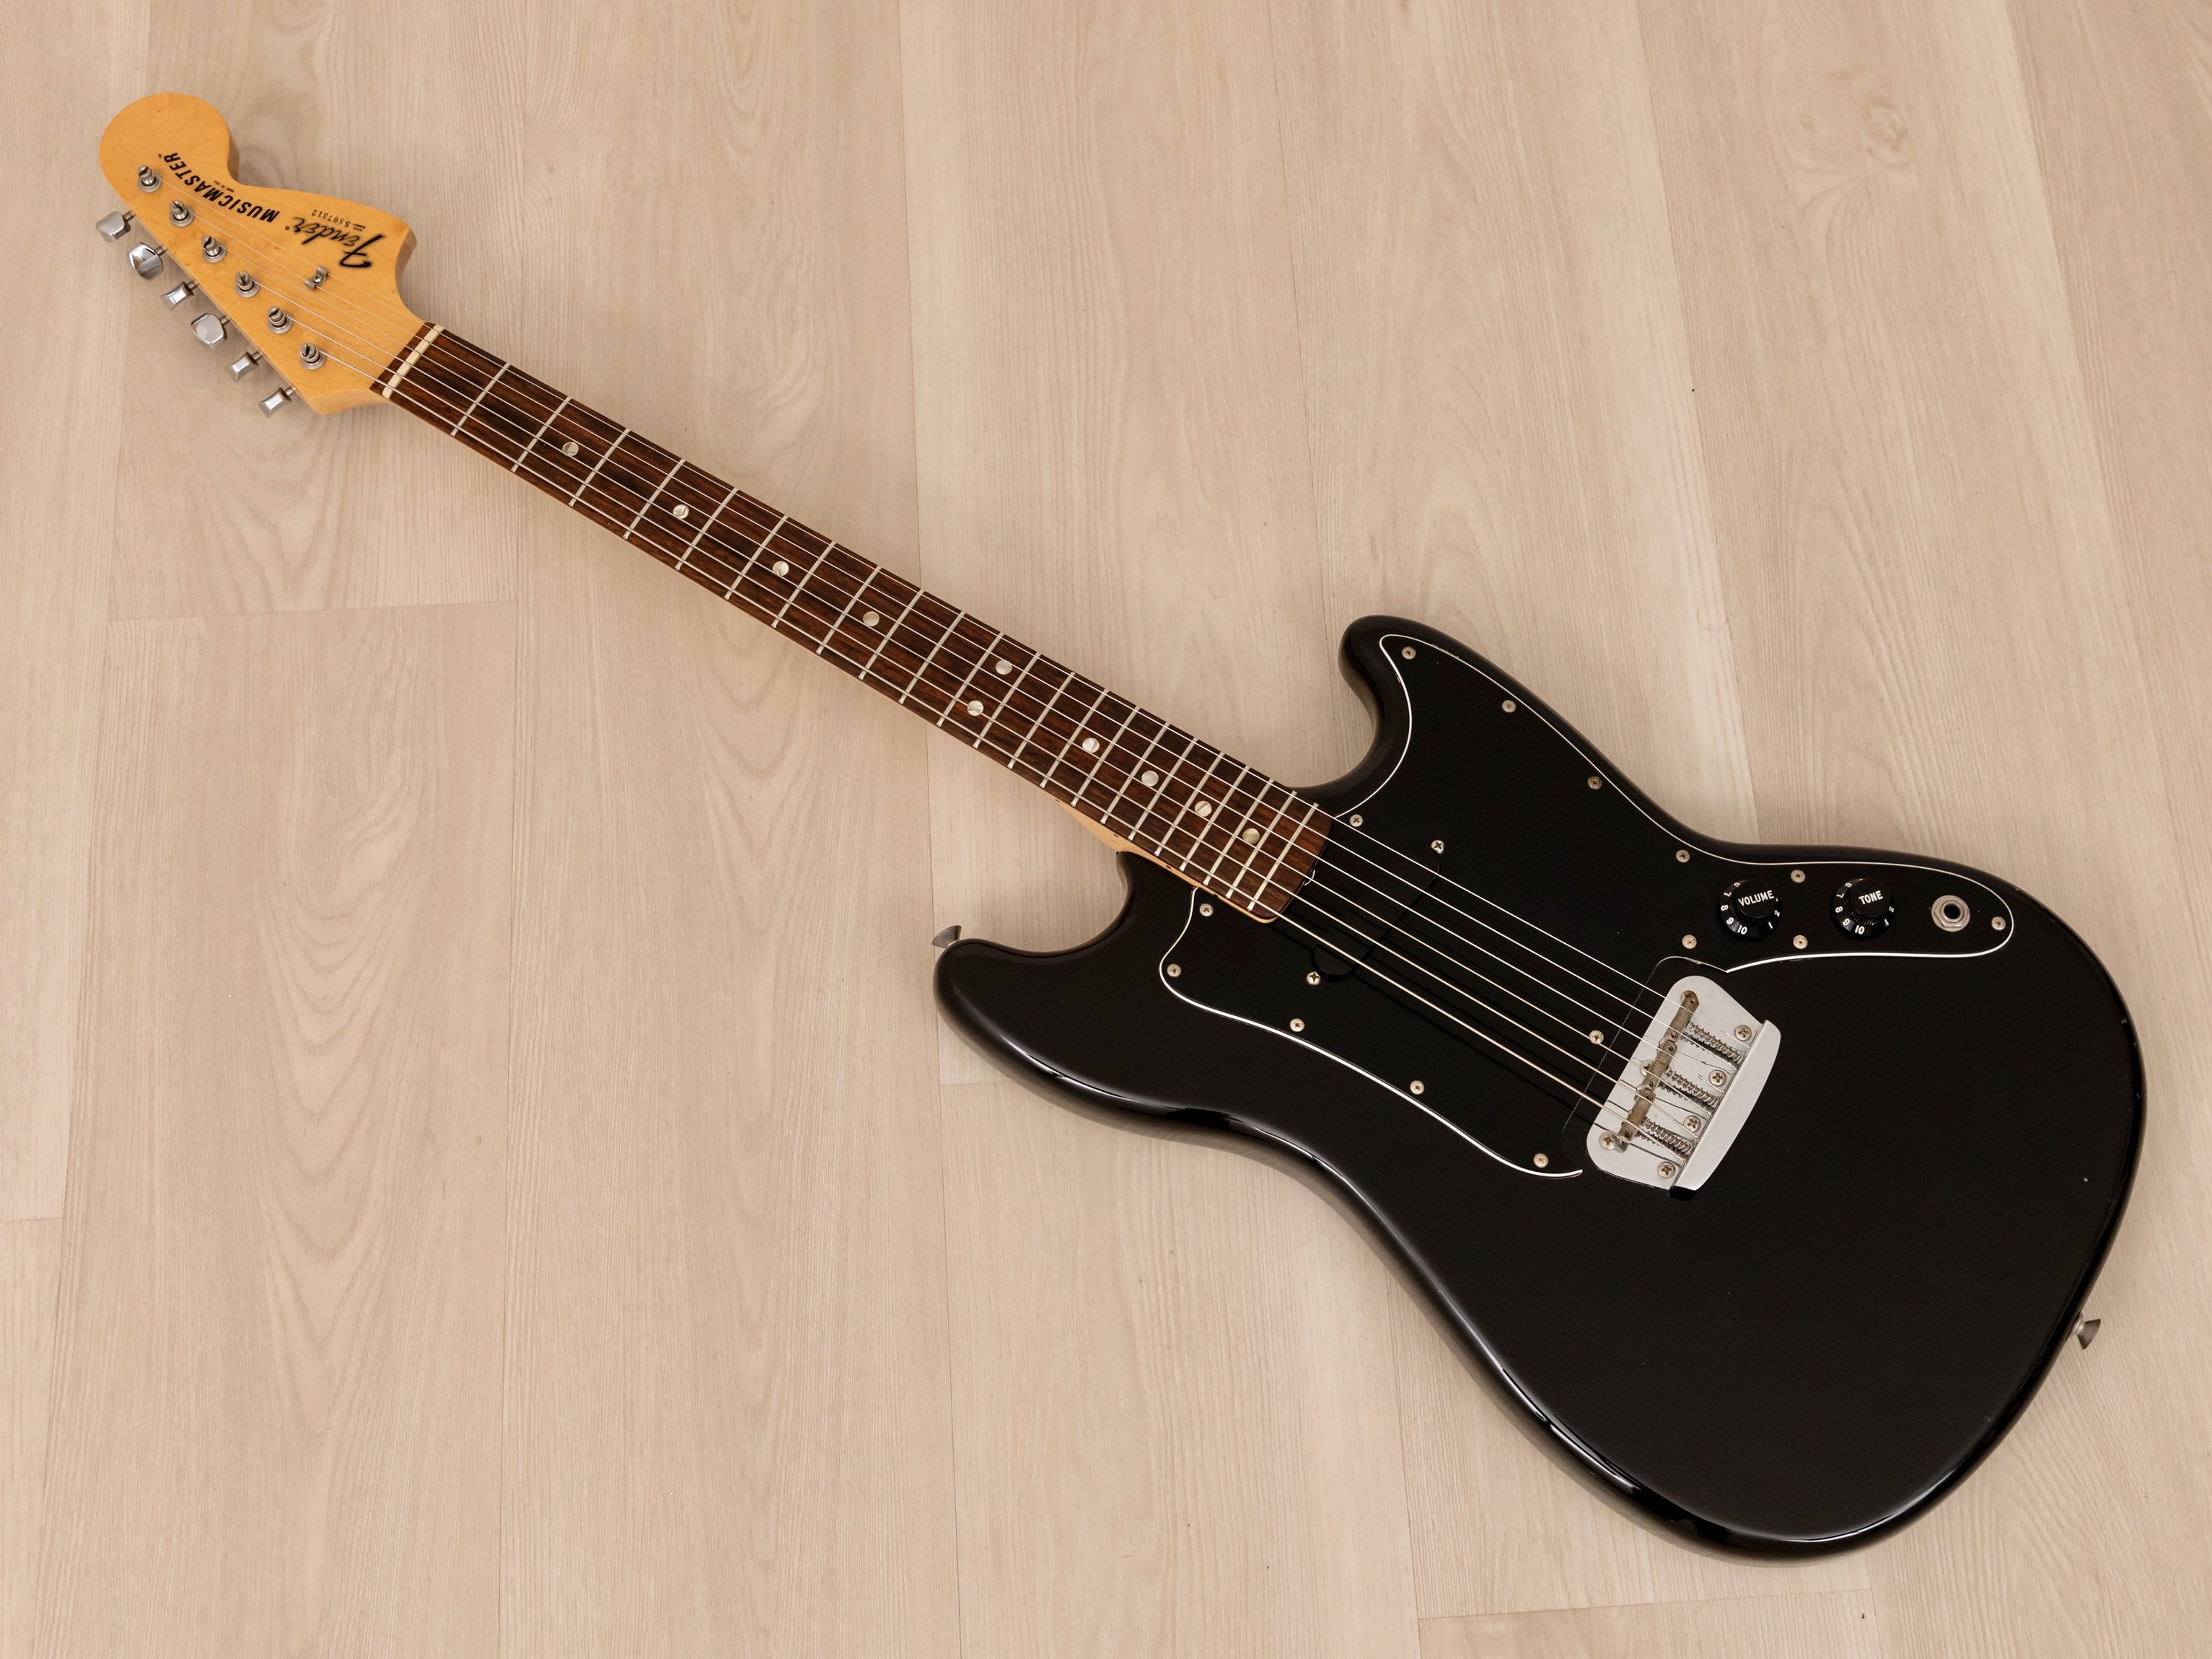 1978 Fender Musicmaster Vintage Offset Guitar Black, 100% Original w/ Hangtags, Case